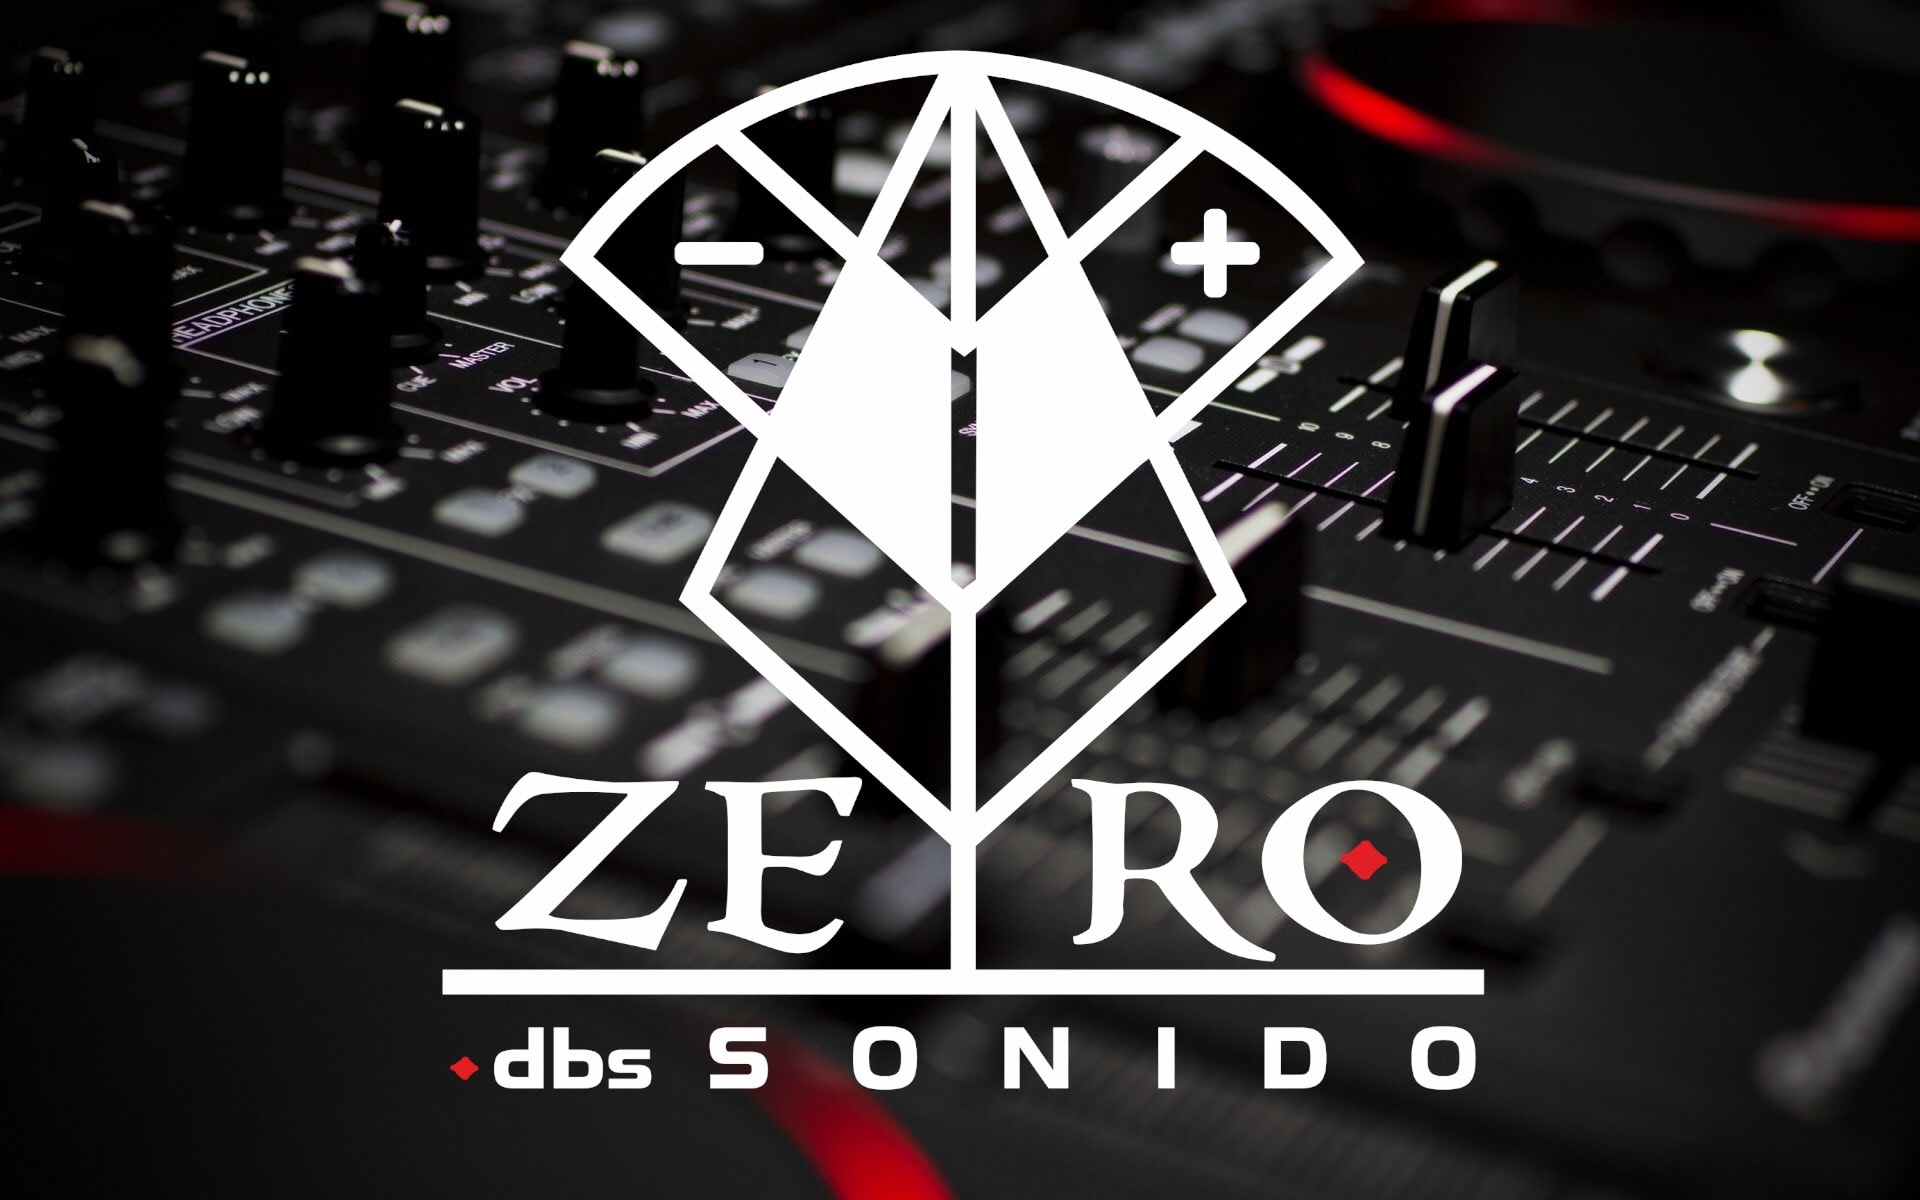 Zero Dbs Sonido